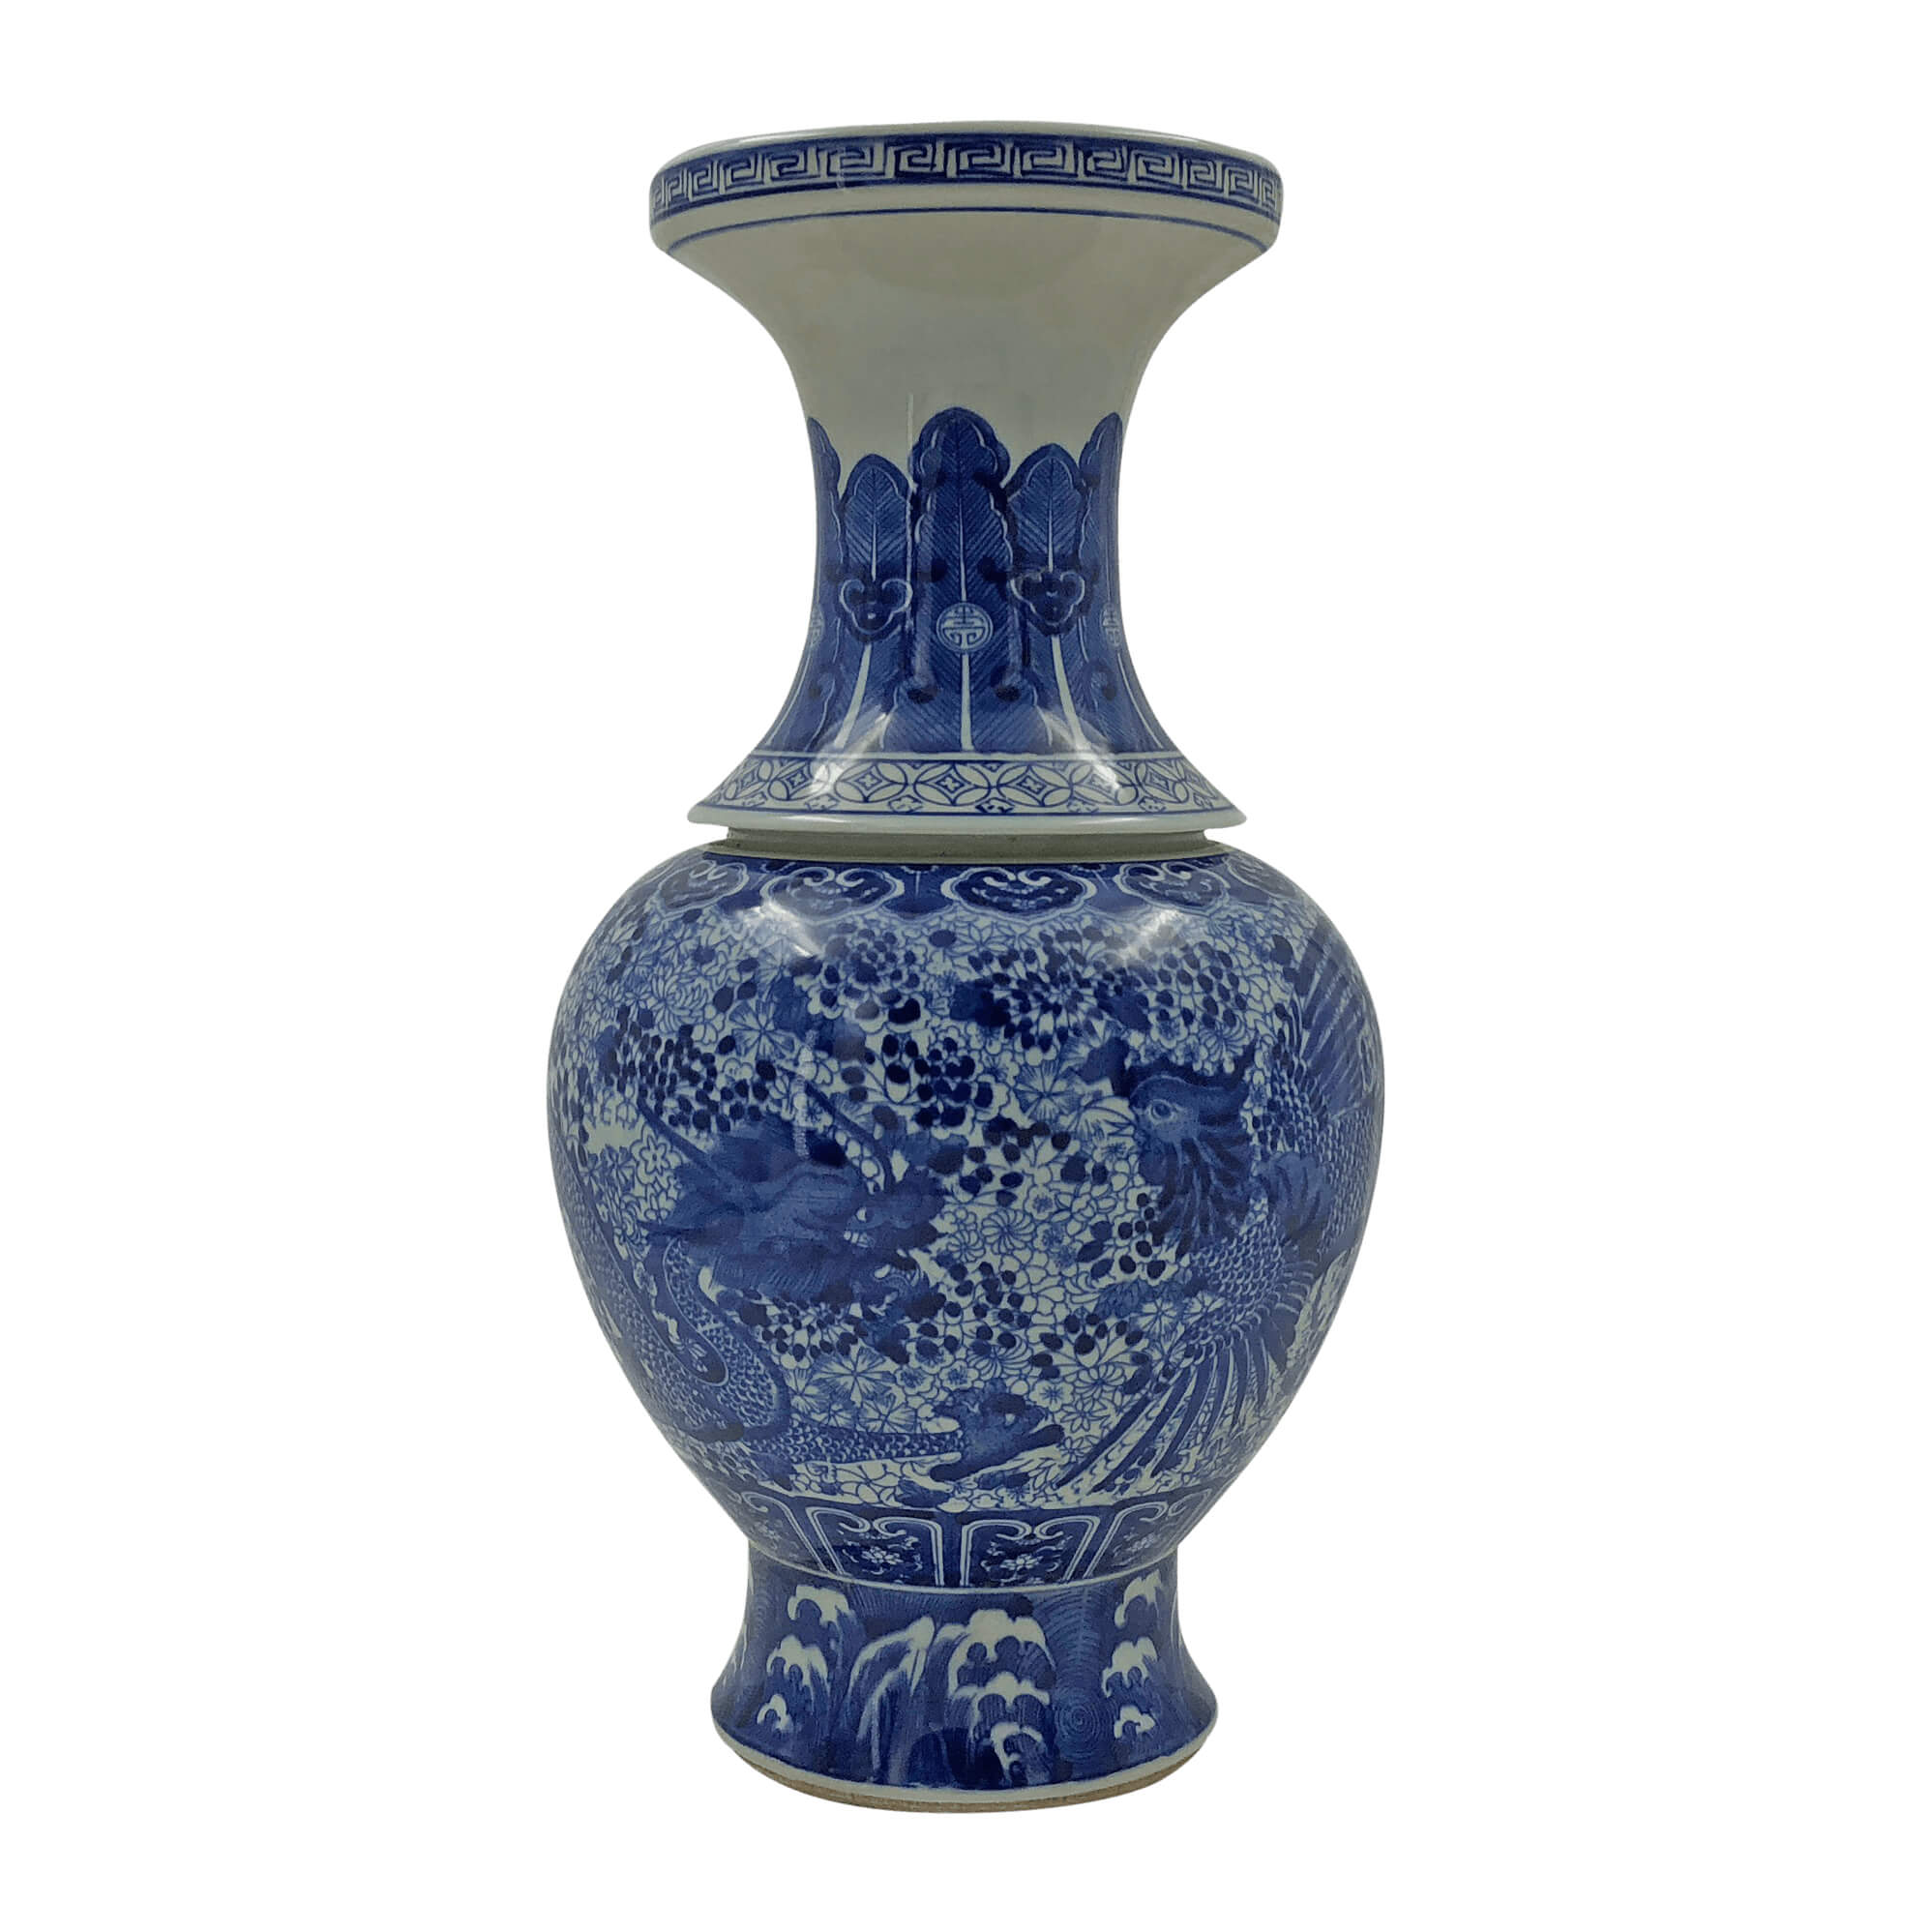 Pair of Chinese Blue and White Ridged Dragon Vases - English Georgian America